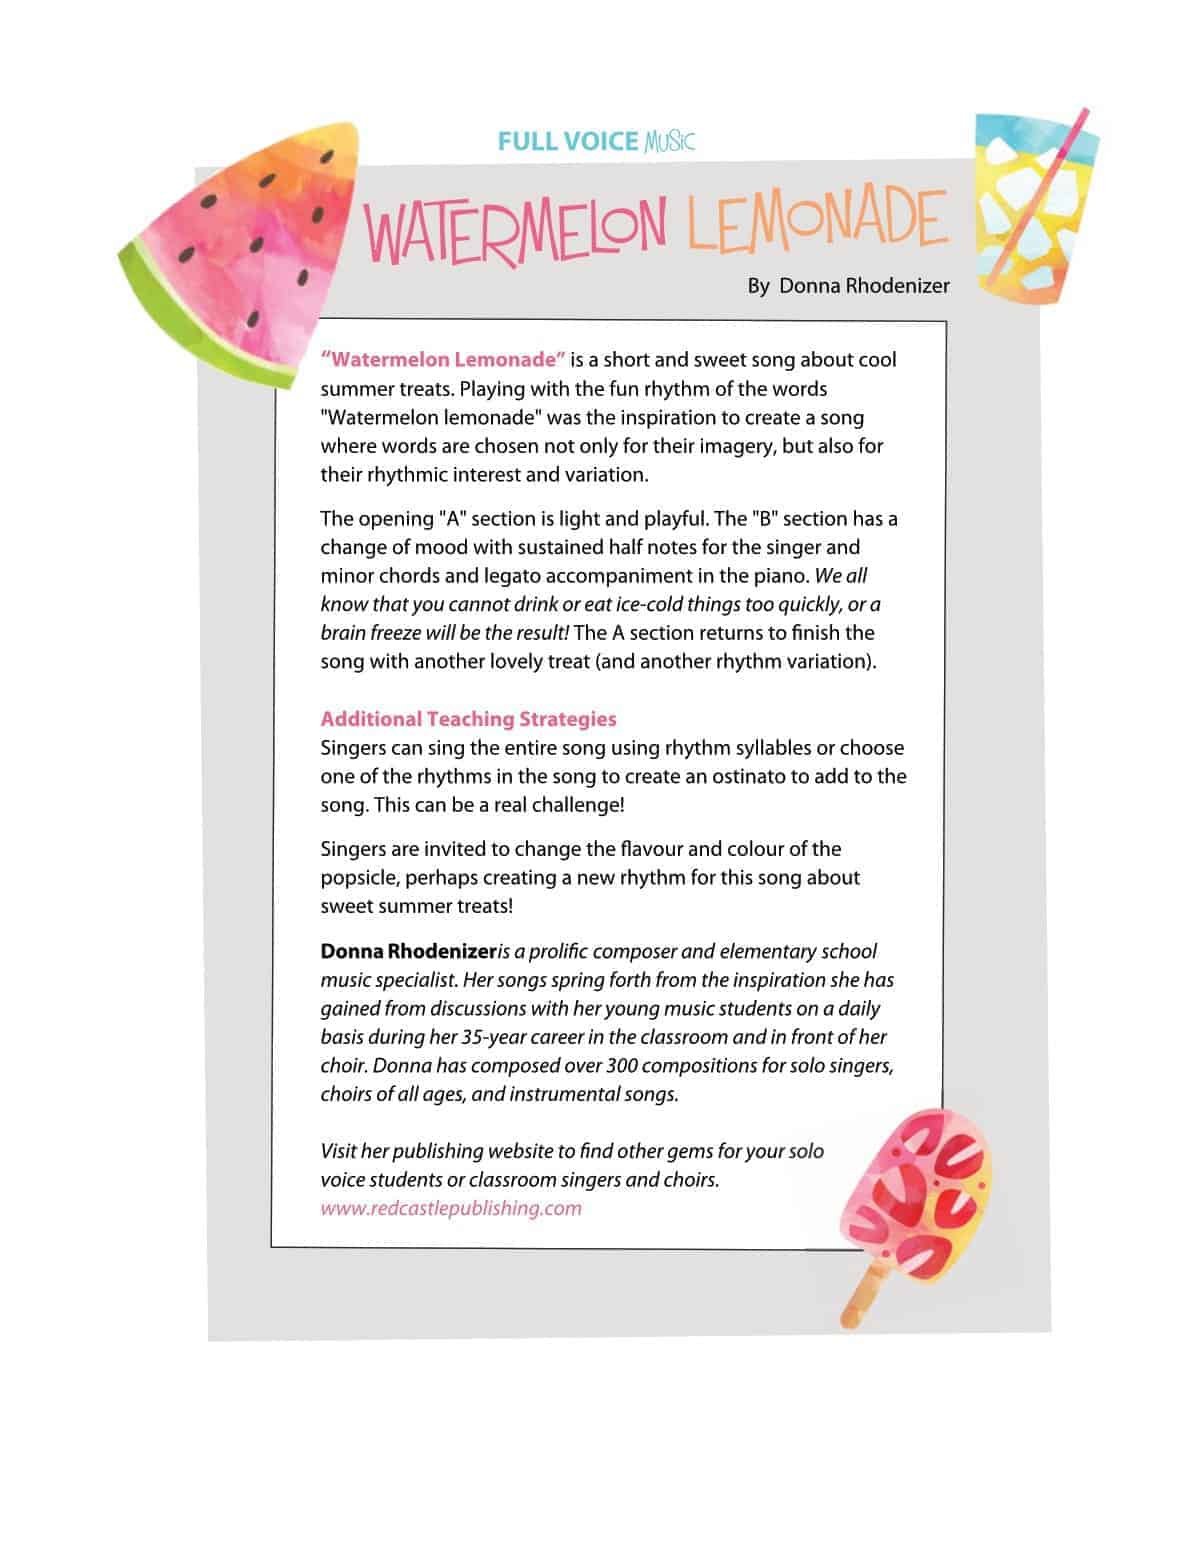 Watermelon Lemonade by Donna Rhodenizer